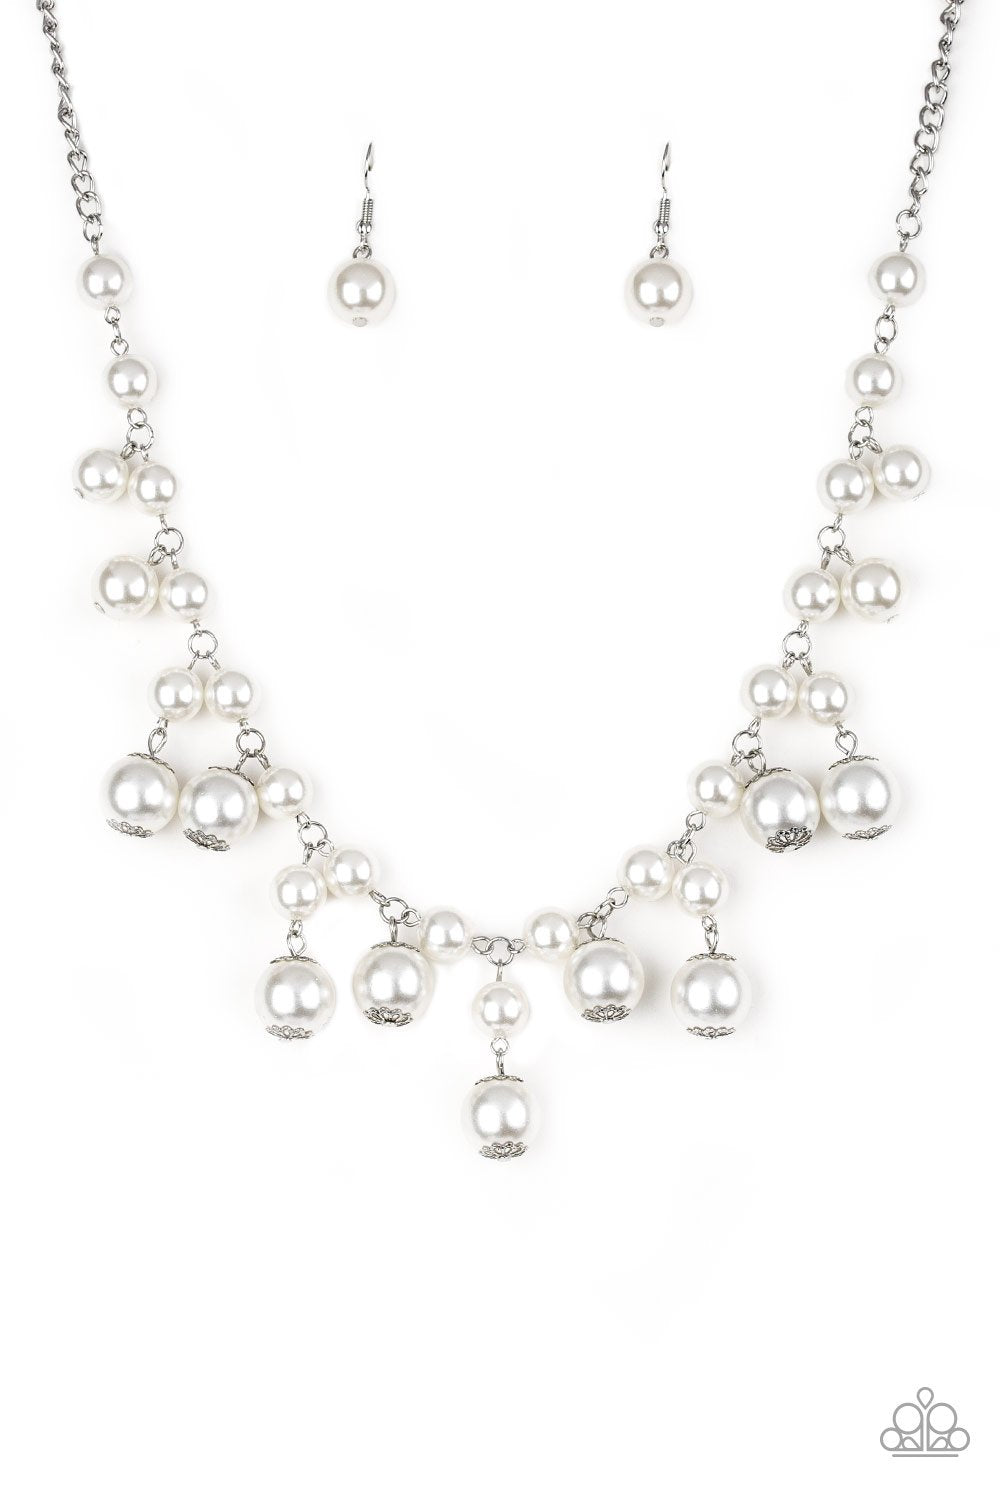 Soon To Be Mrs. White (Pearls) Necklace freeshipping - JewLz4u Gemstone Gallery